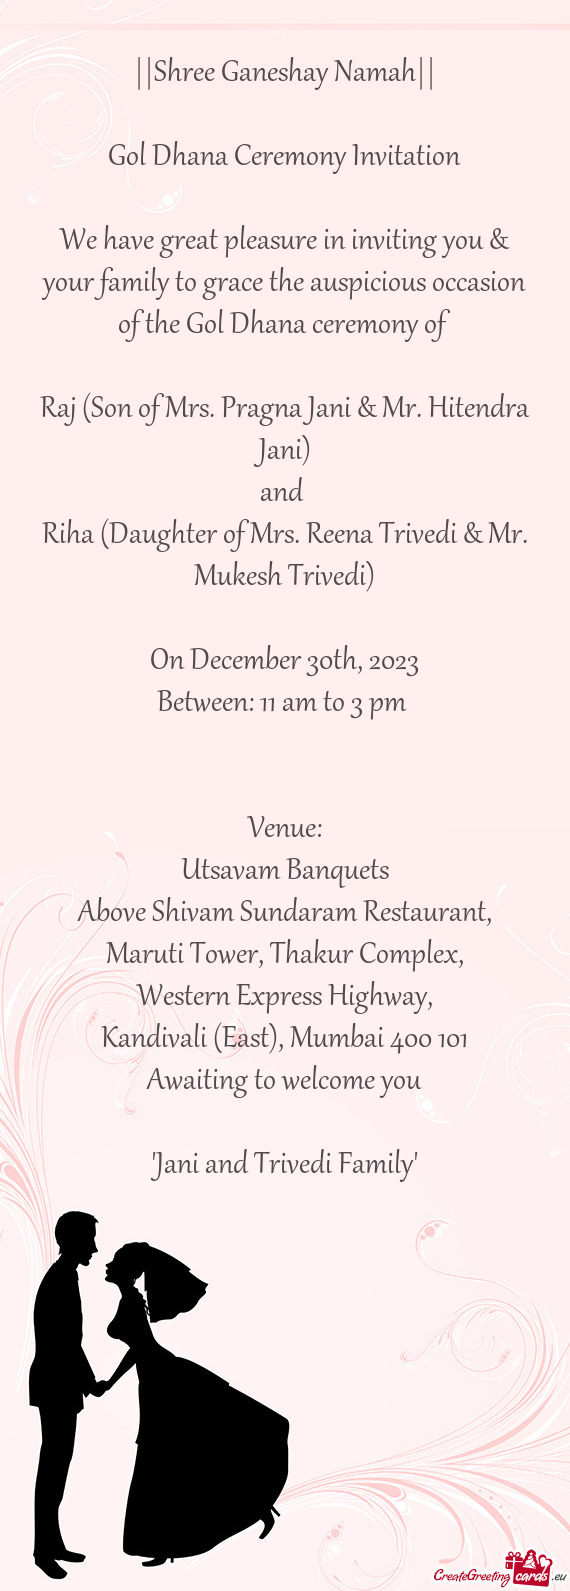 Riha (Daughter of Mrs. Reena Trivedi & Mr. Mukesh Trivedi)